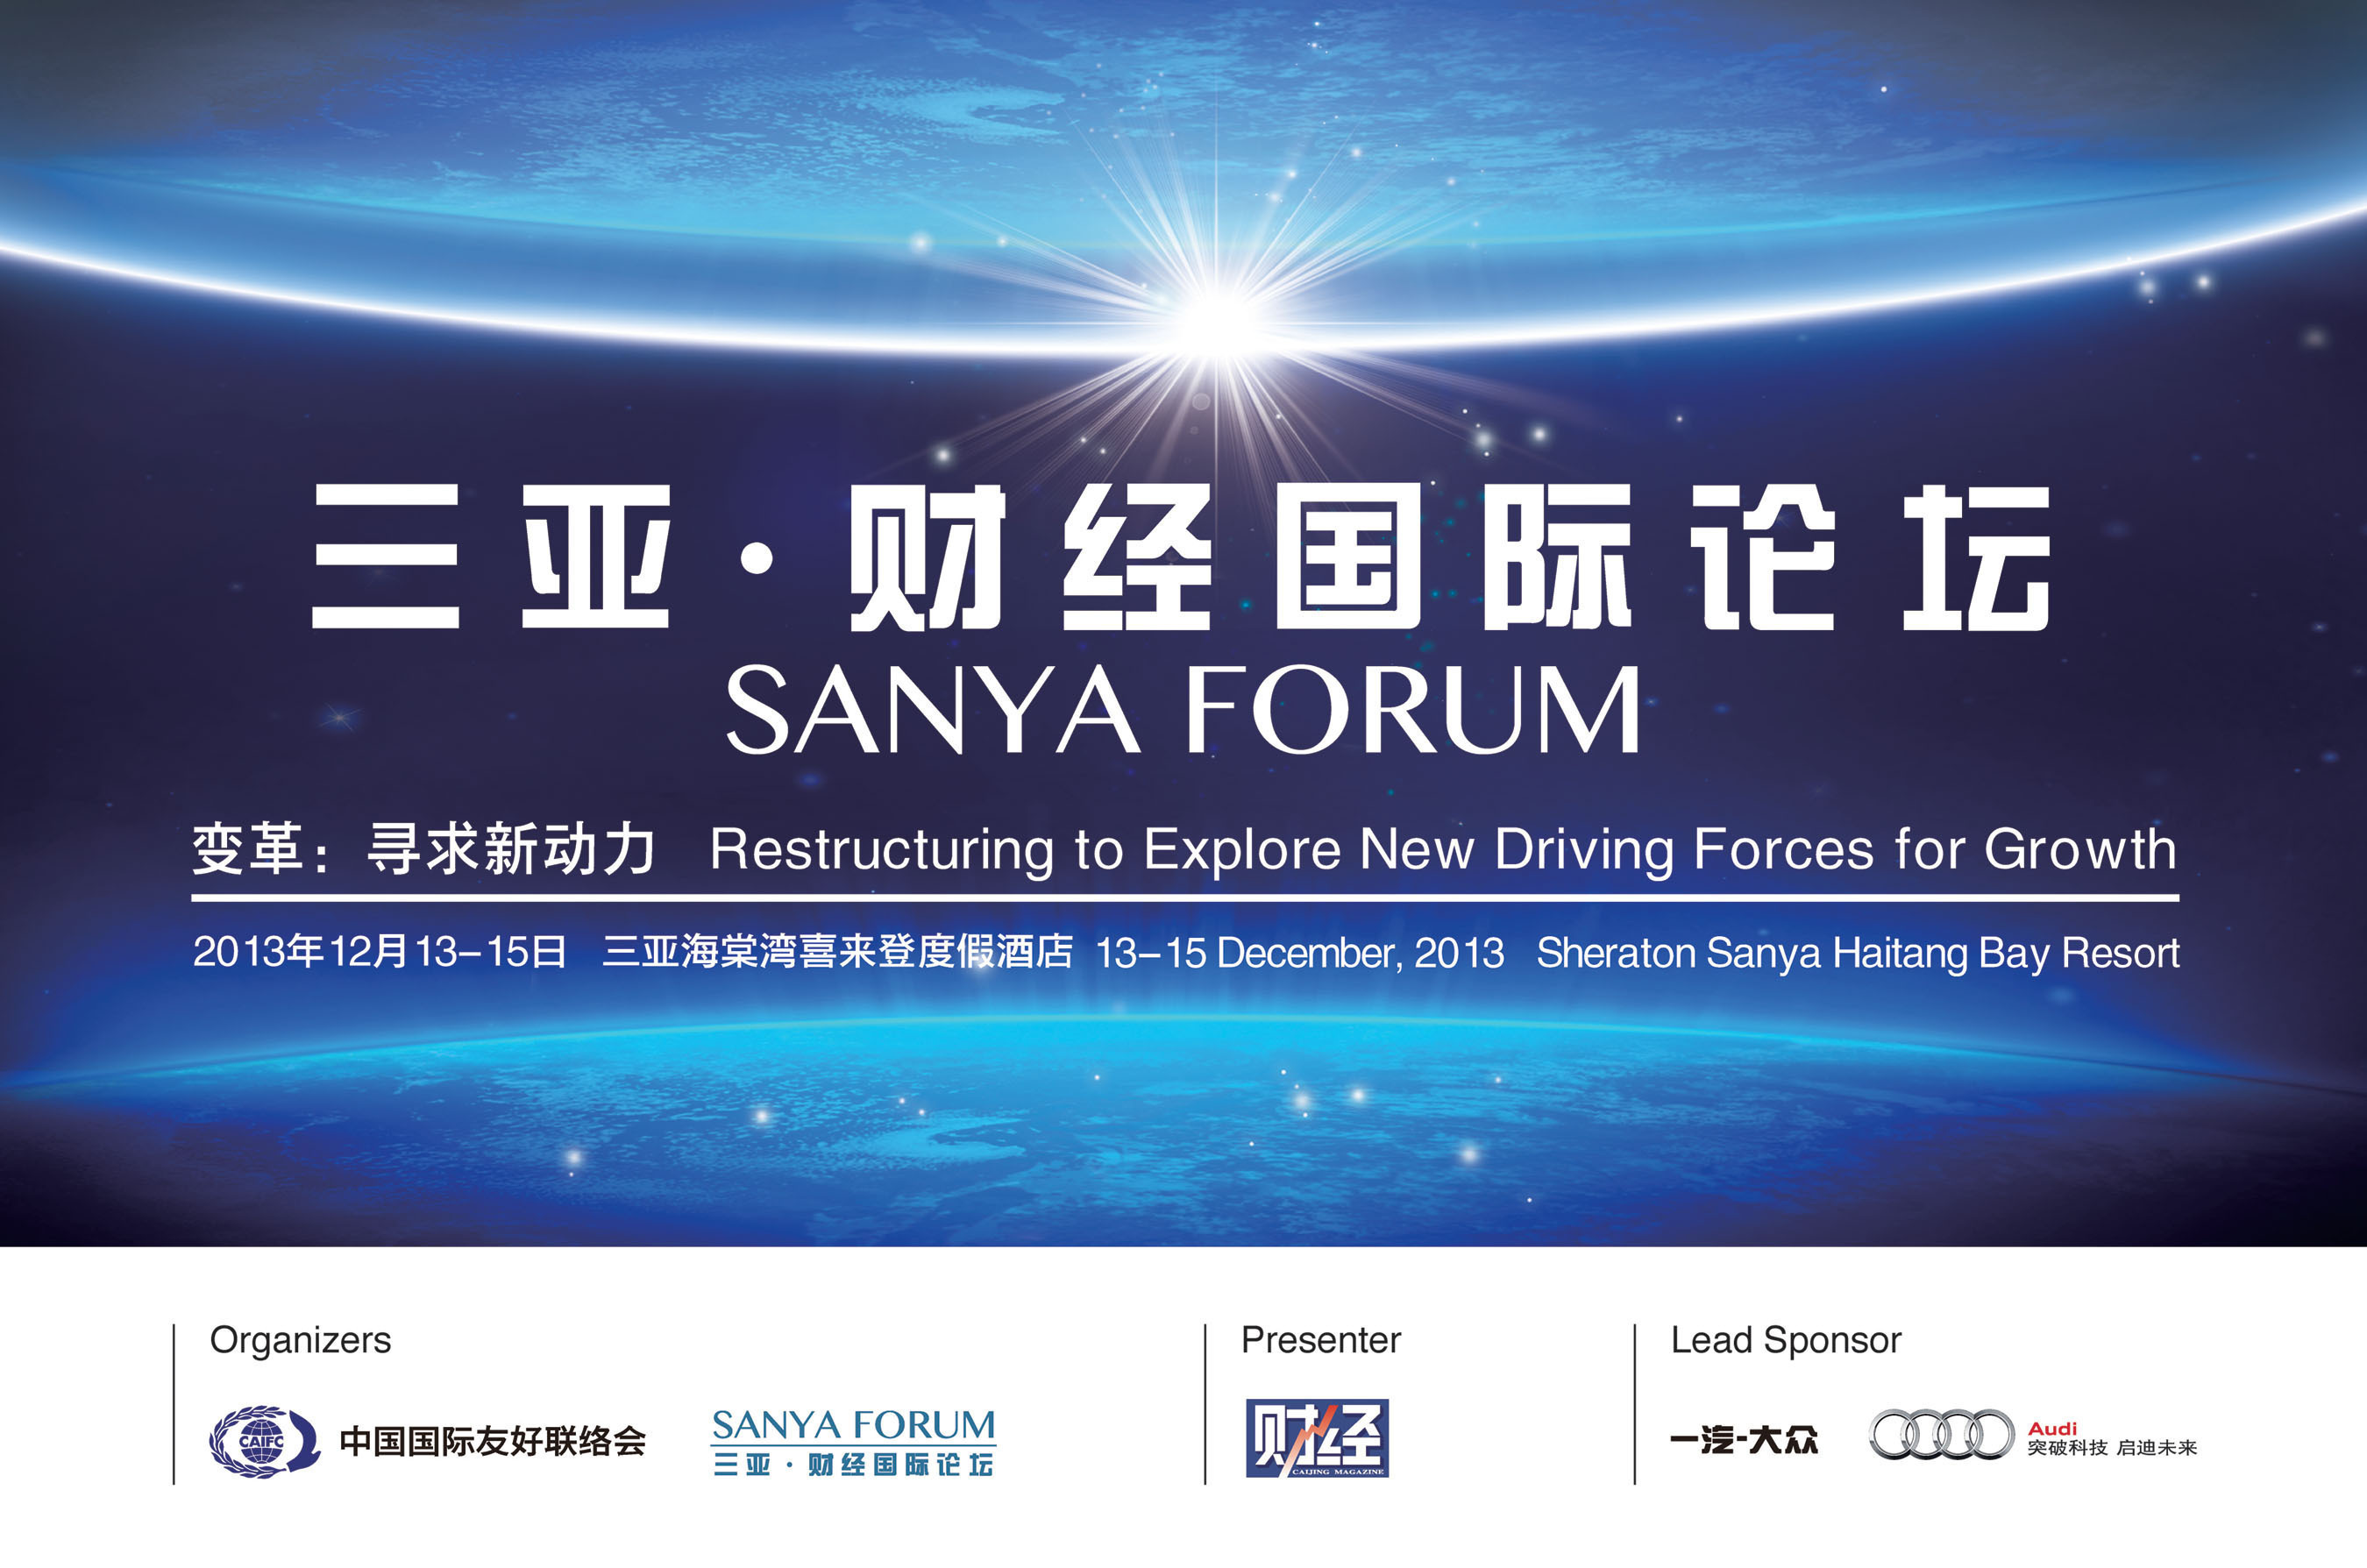 The Sanya Forum 2013 will take place on December 13-15 in Sanya, Hainan. (PRNewsFoto/CAIJING Magazine) (PRNewsFoto/CAIJING MAGAZINE)